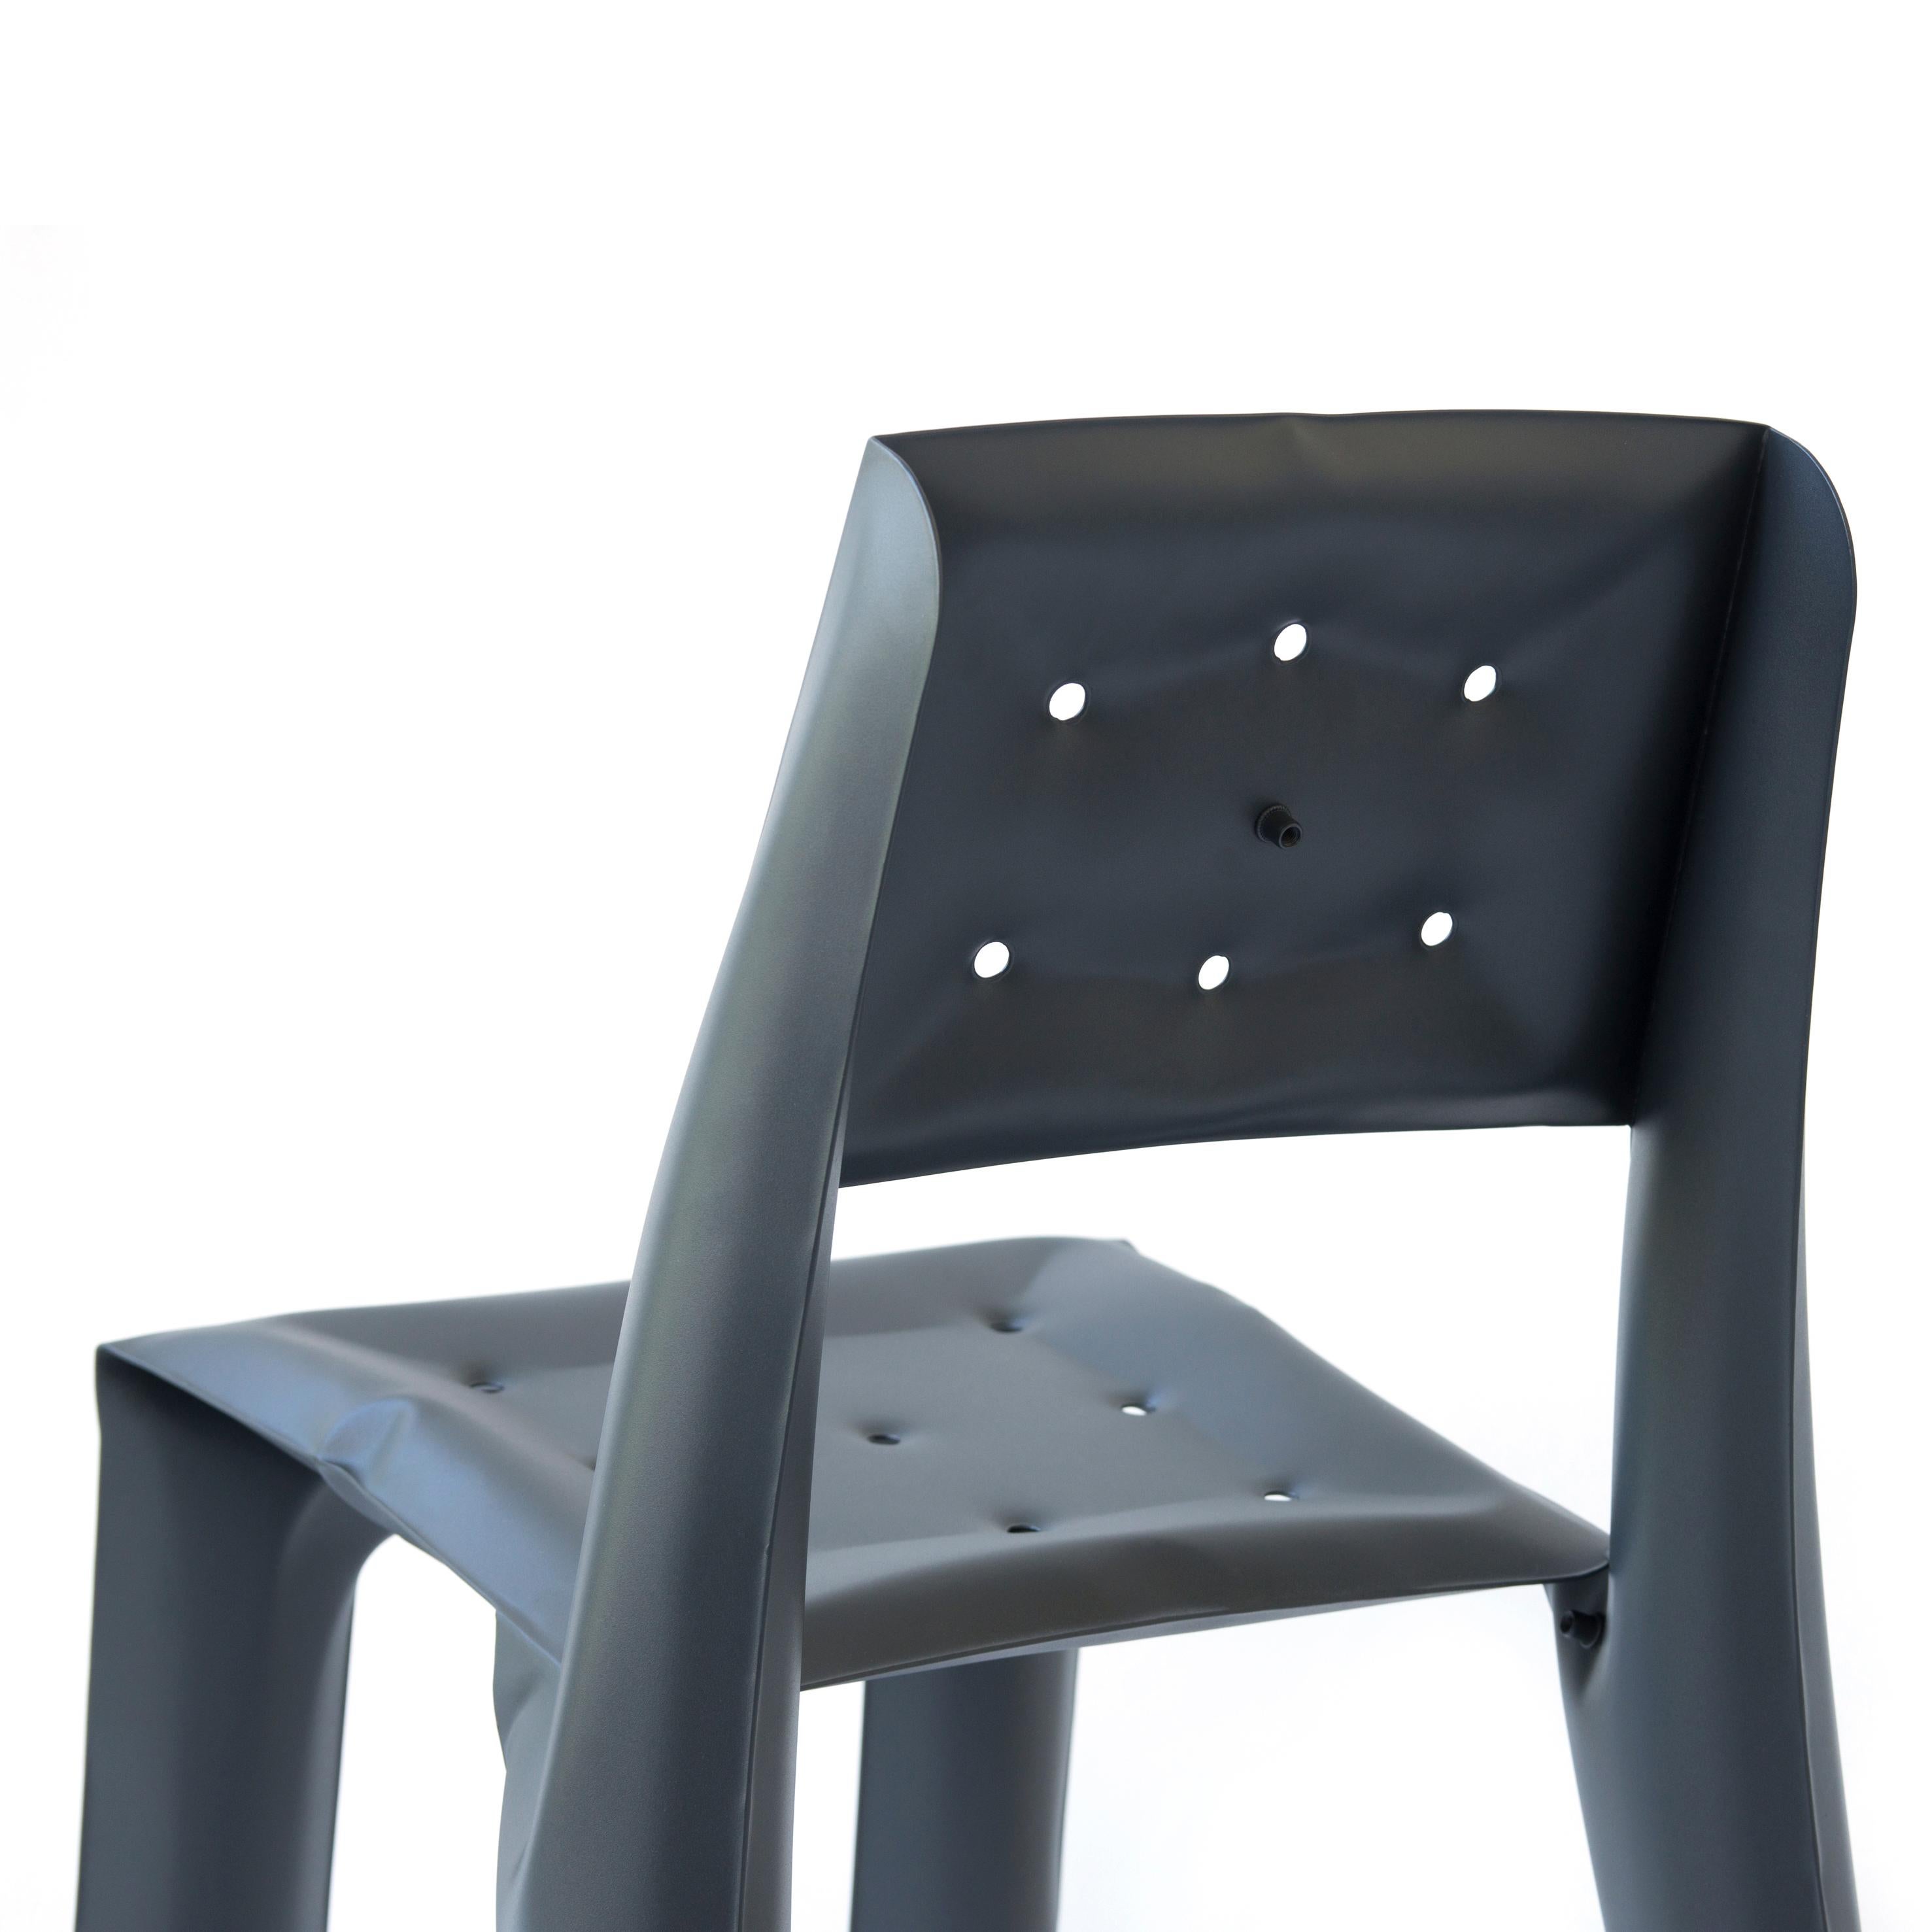 Graphite Carbon Steel Chippensteel 0.5 Sculptural Chair by Zieta For Sale 2